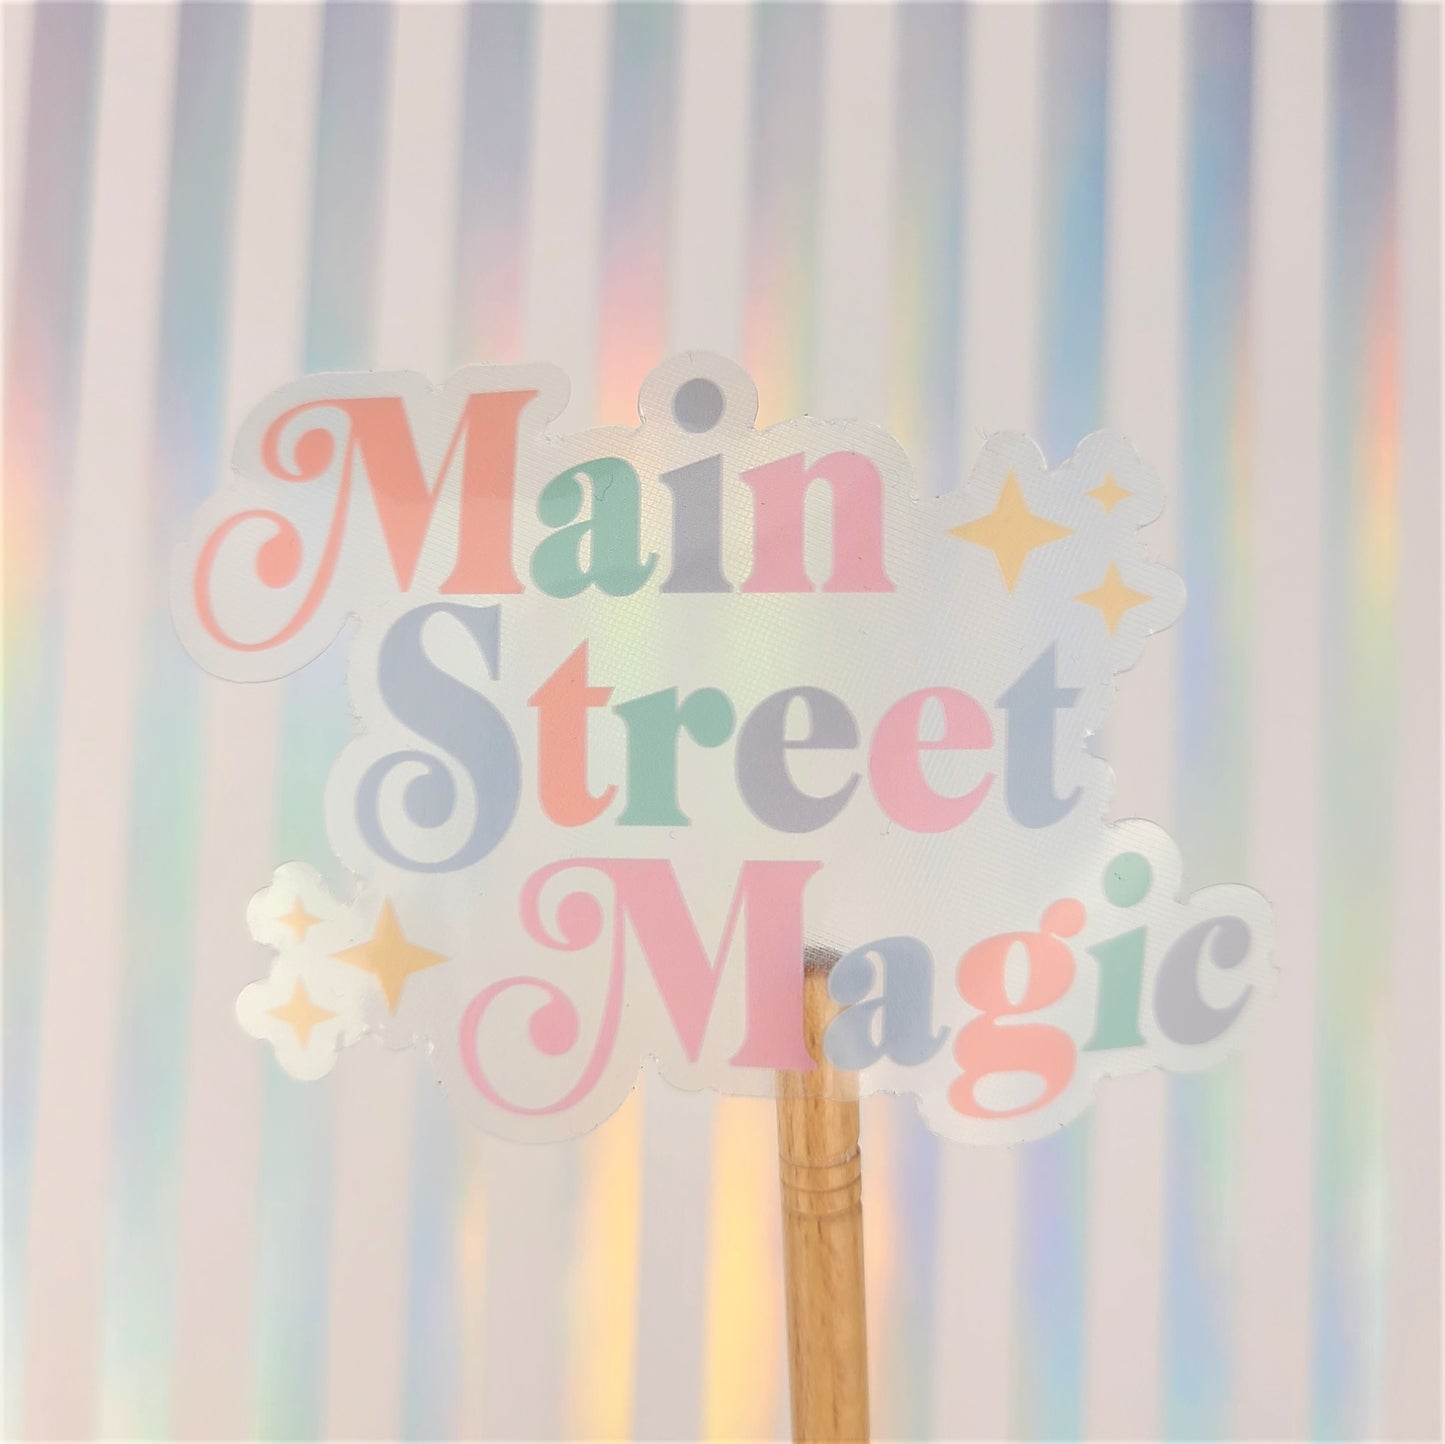 Main Street Magic Clear Vinyl Sticker